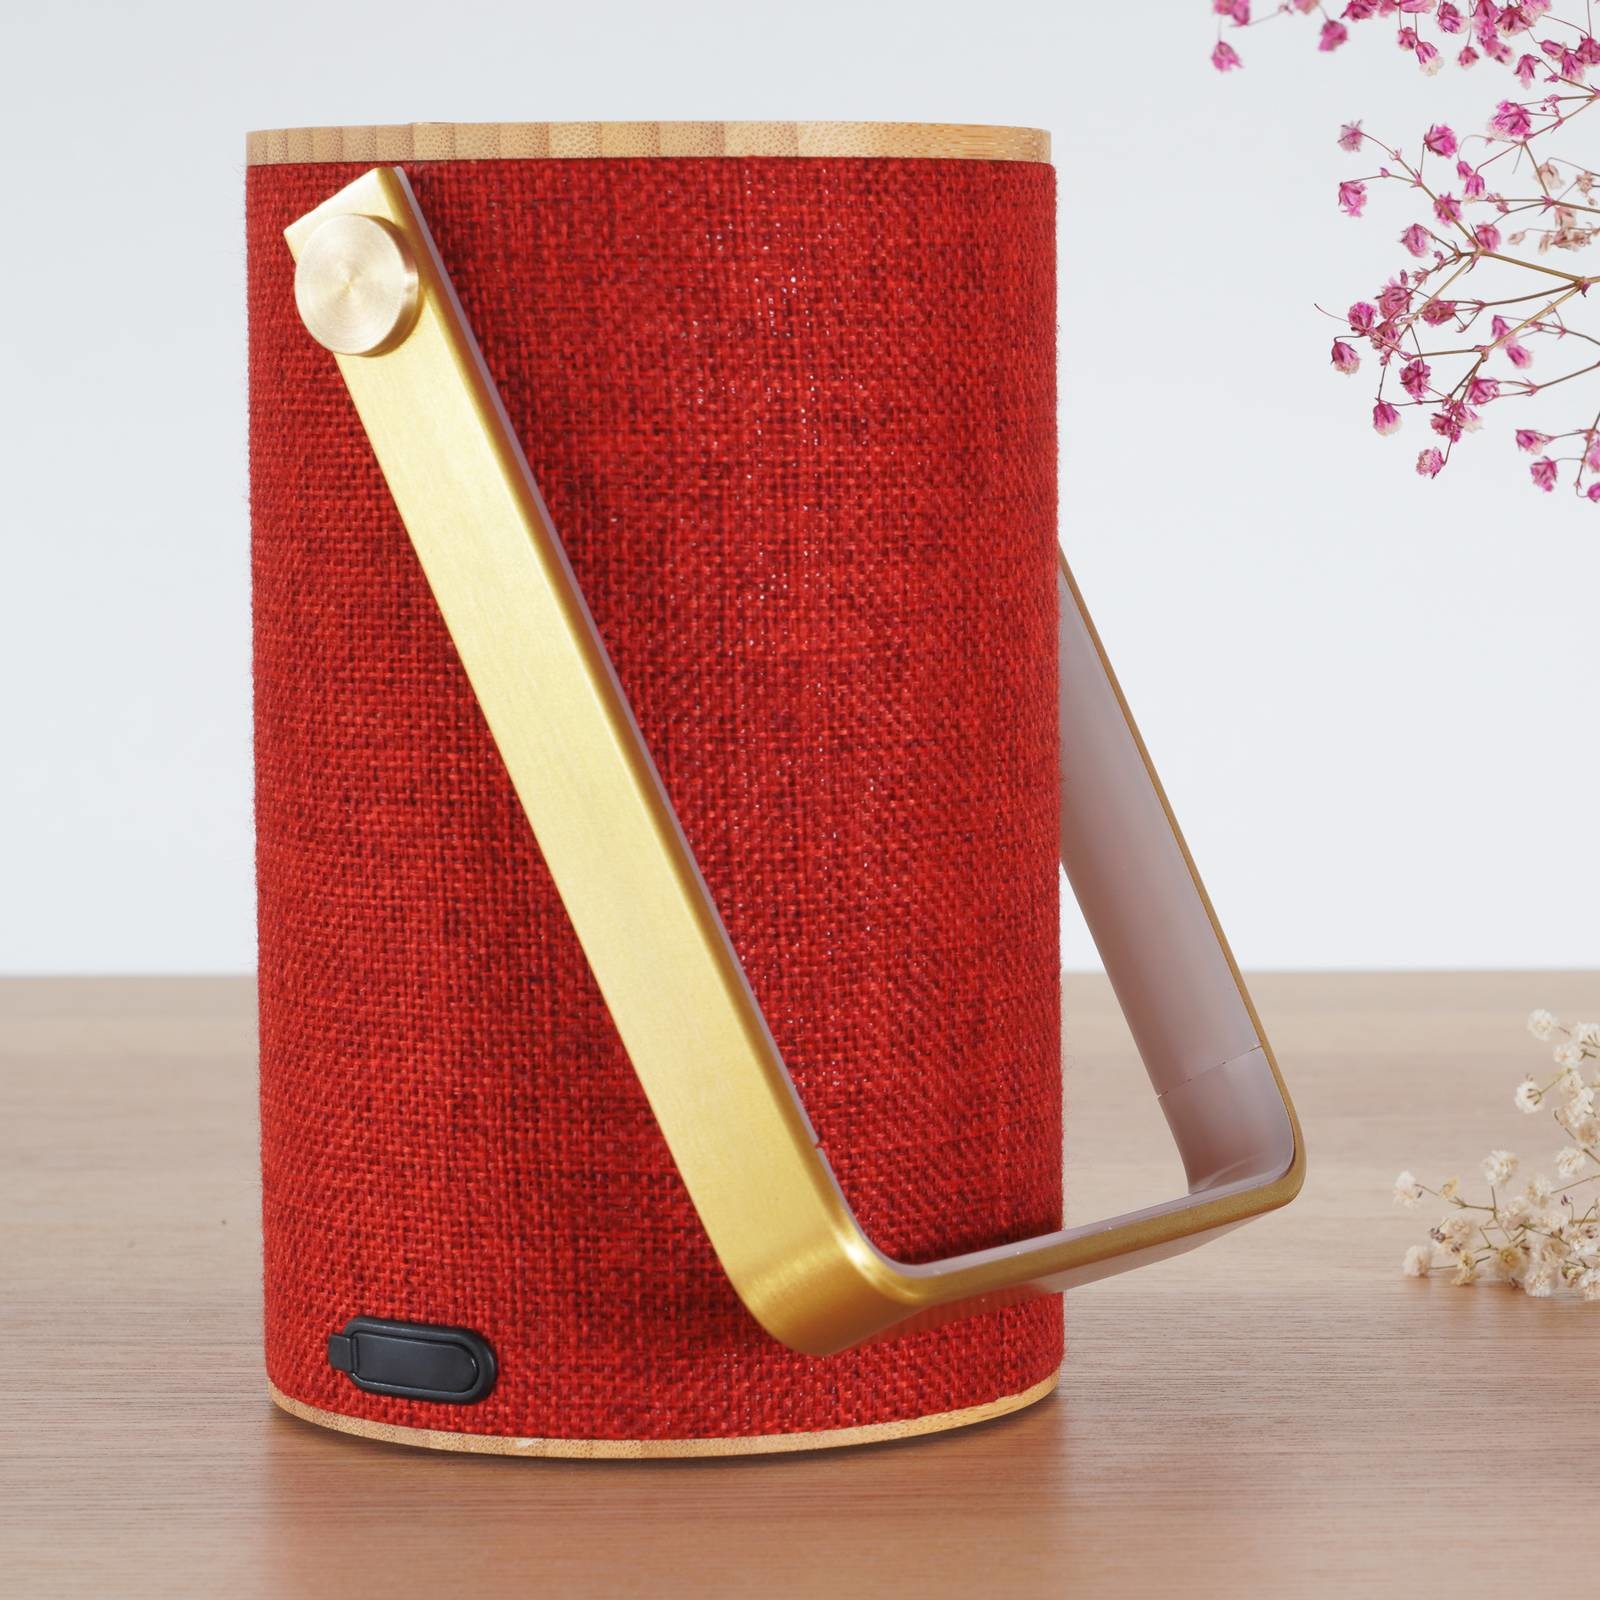 LOOM DESIGN LOOM DESIGN Silo 1 dekoracyjna BT-speaker czerwona